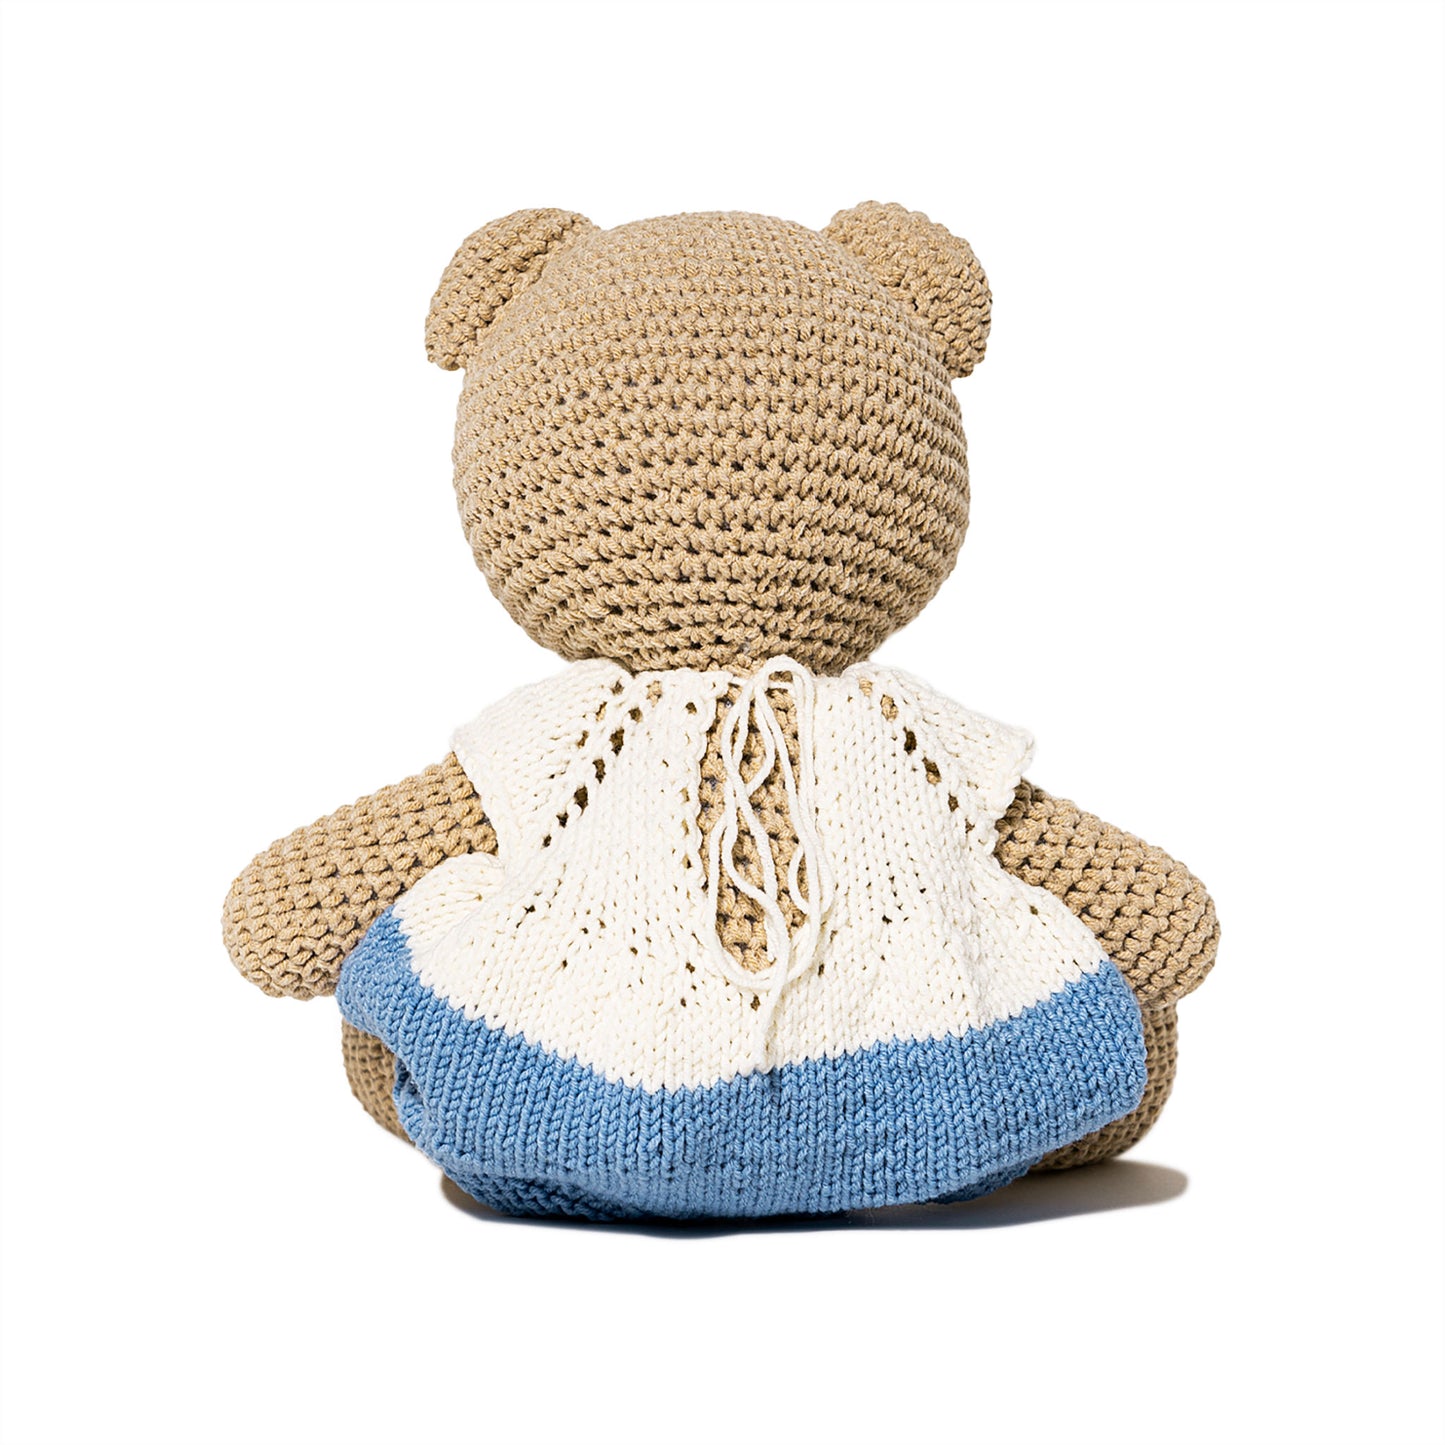 White/Blue Lulibears Archook Crochet Teddy Bears. Handmade stuffed animal, puppy, knit by hand.